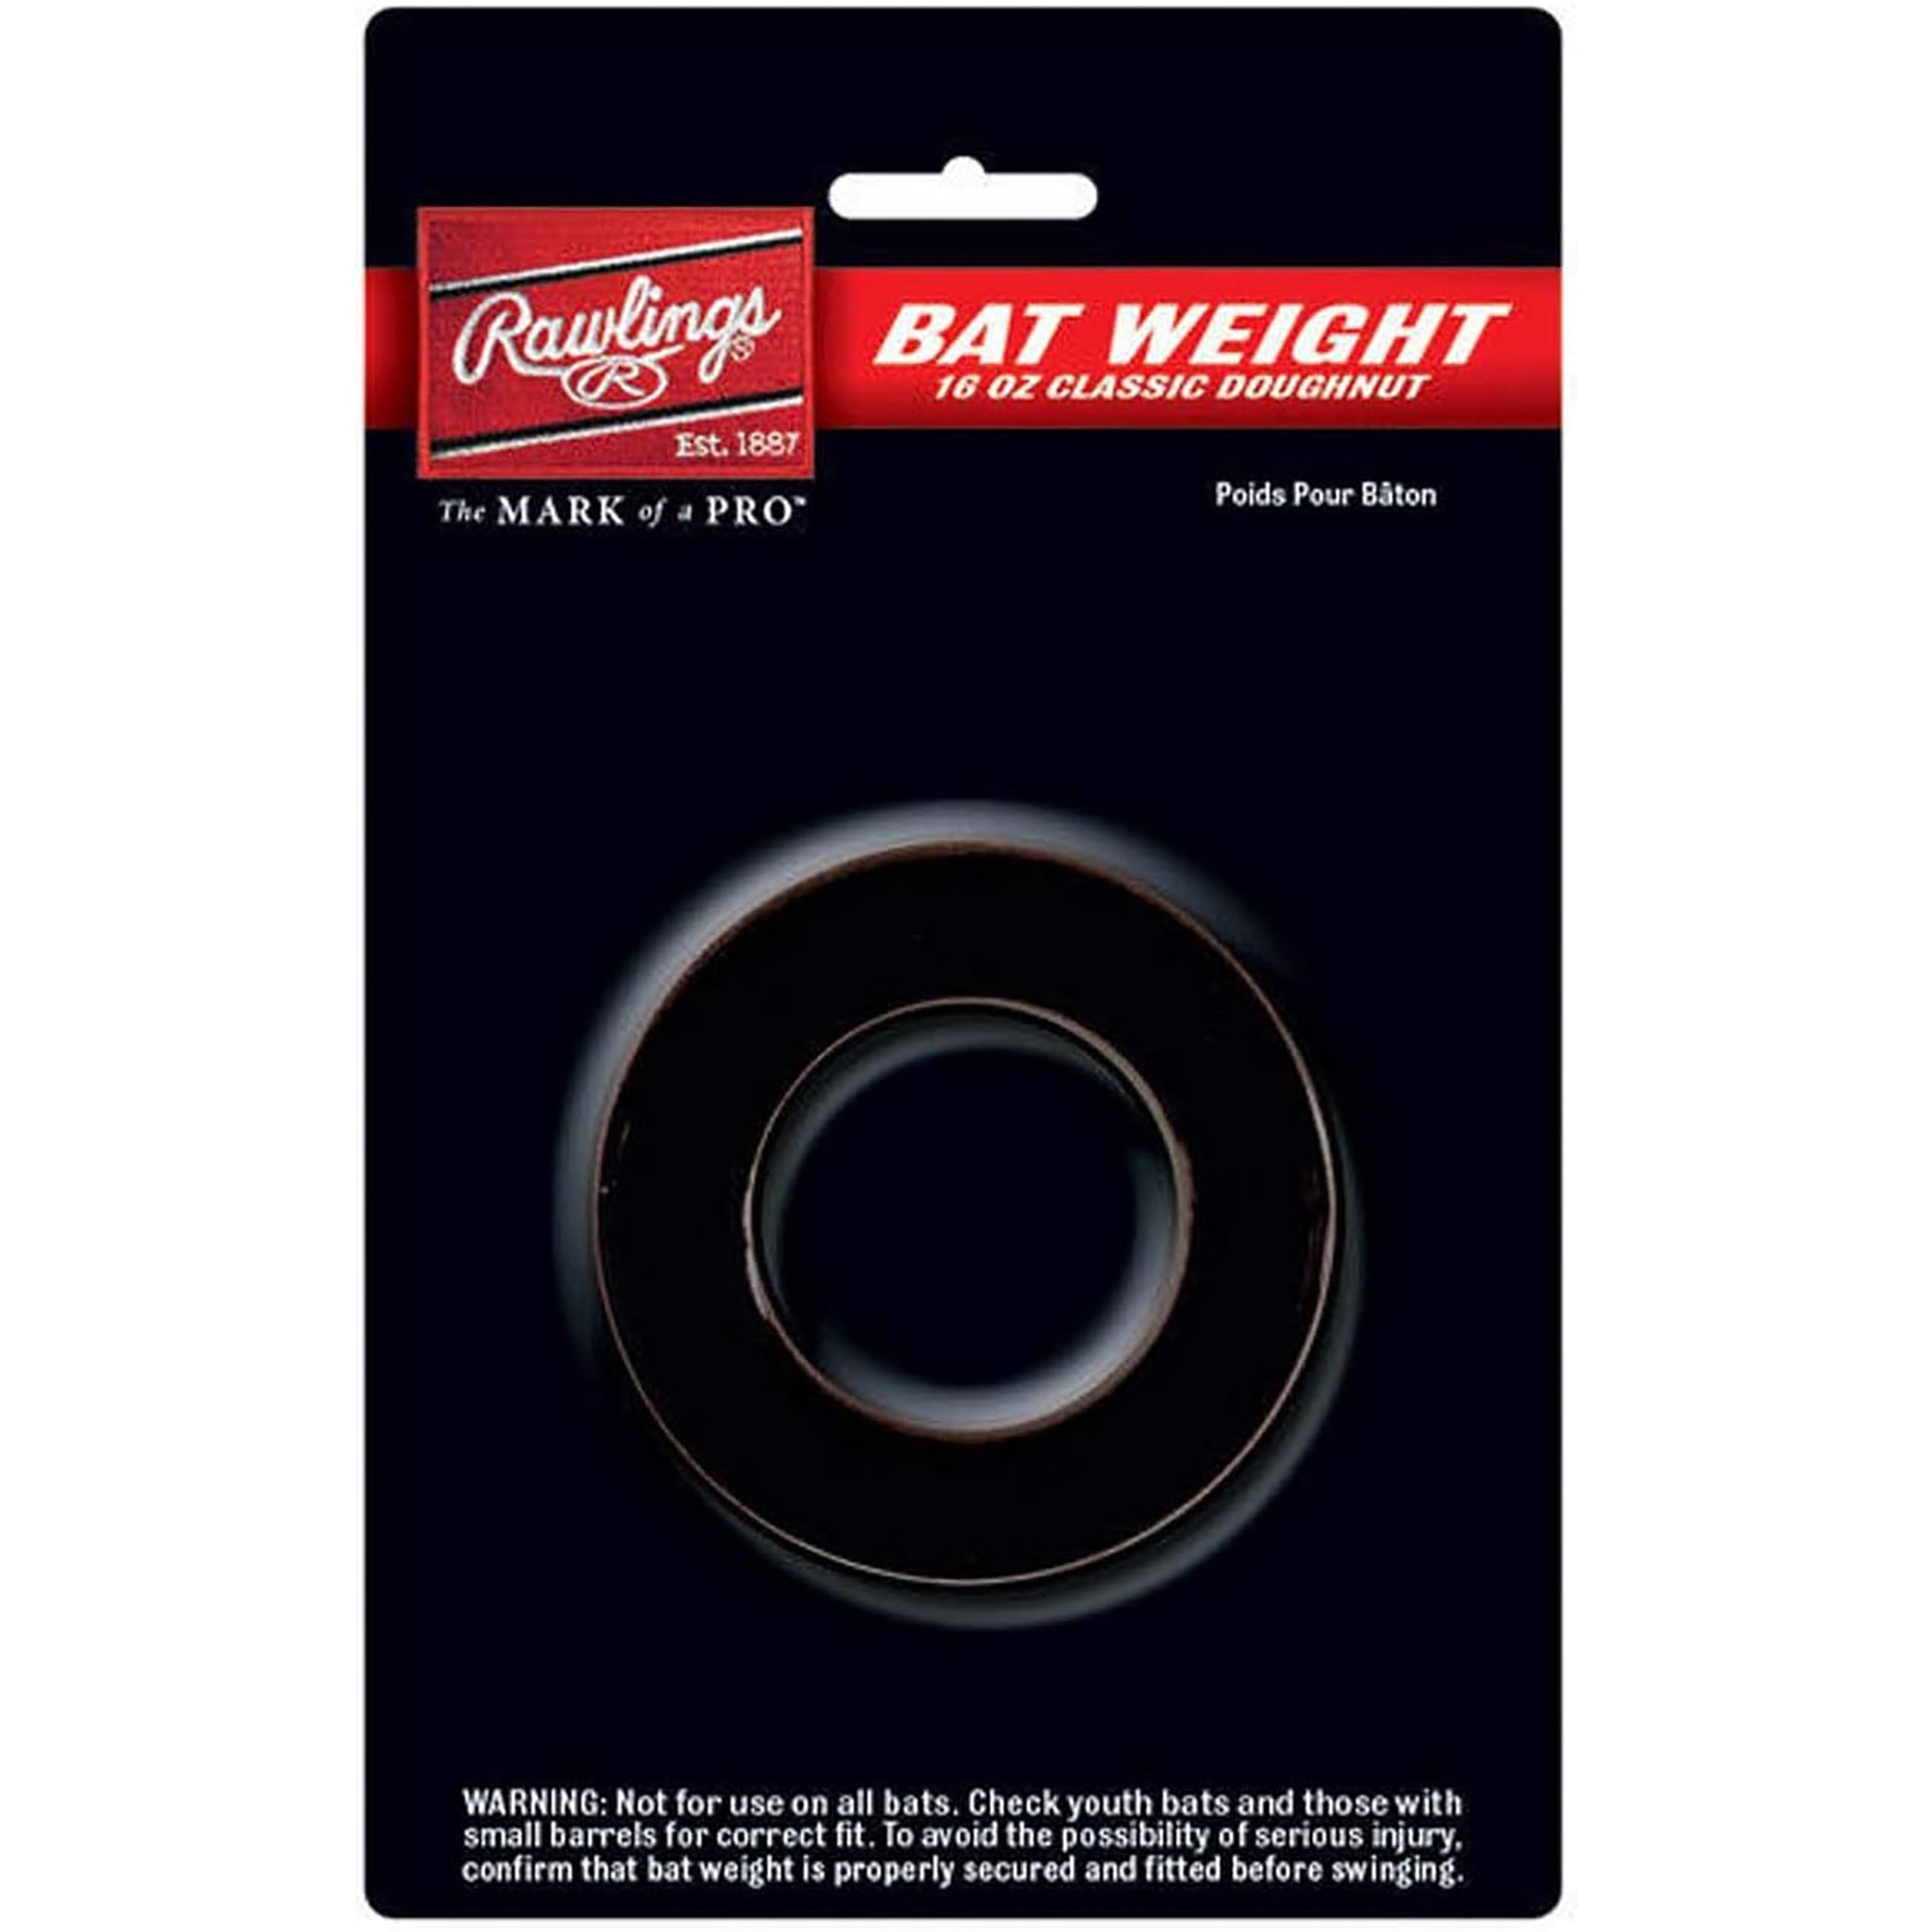 Rawlings 16 oz. Classic Doughnut Style Baseball/Softball Bat Weight Rawlings